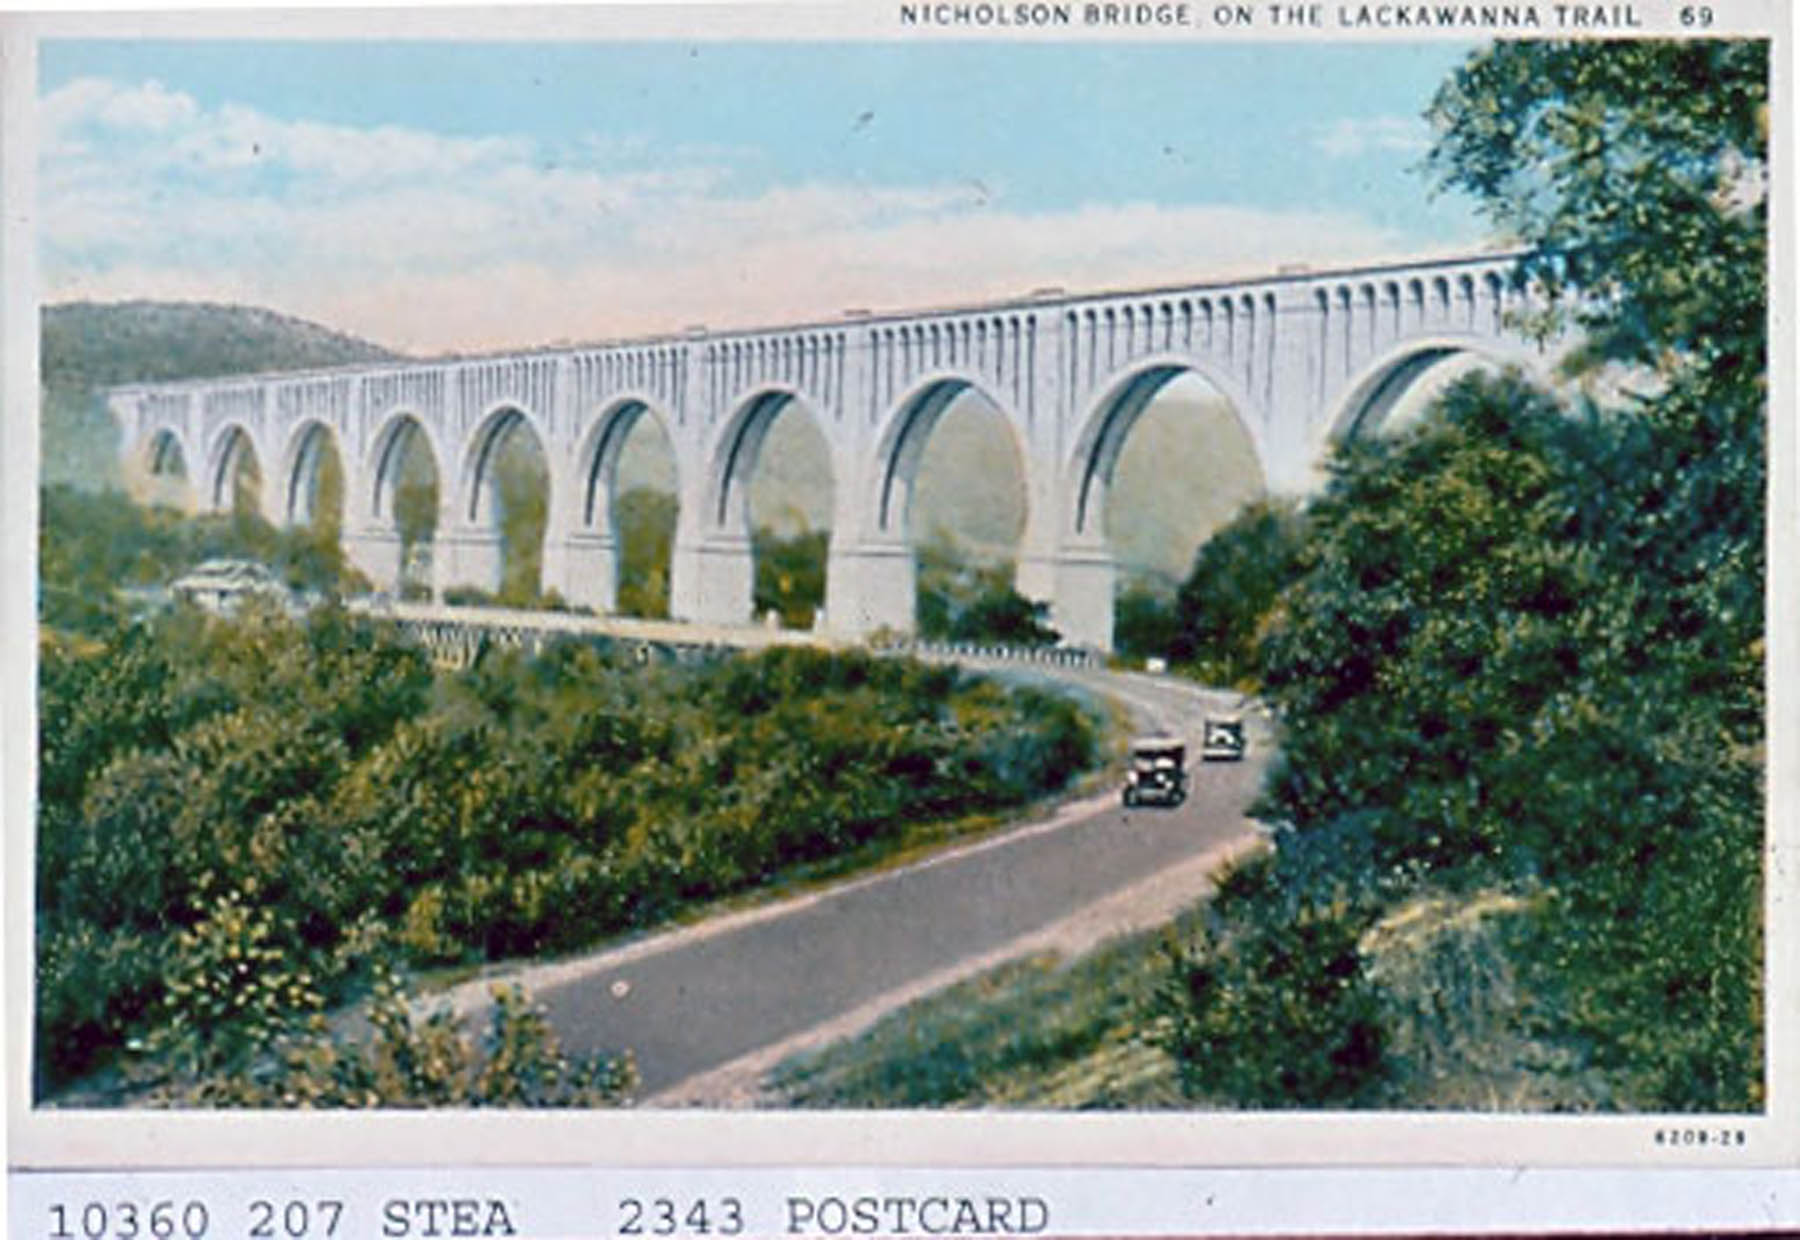 Nicholson Bridge on the Lackawanna Trail